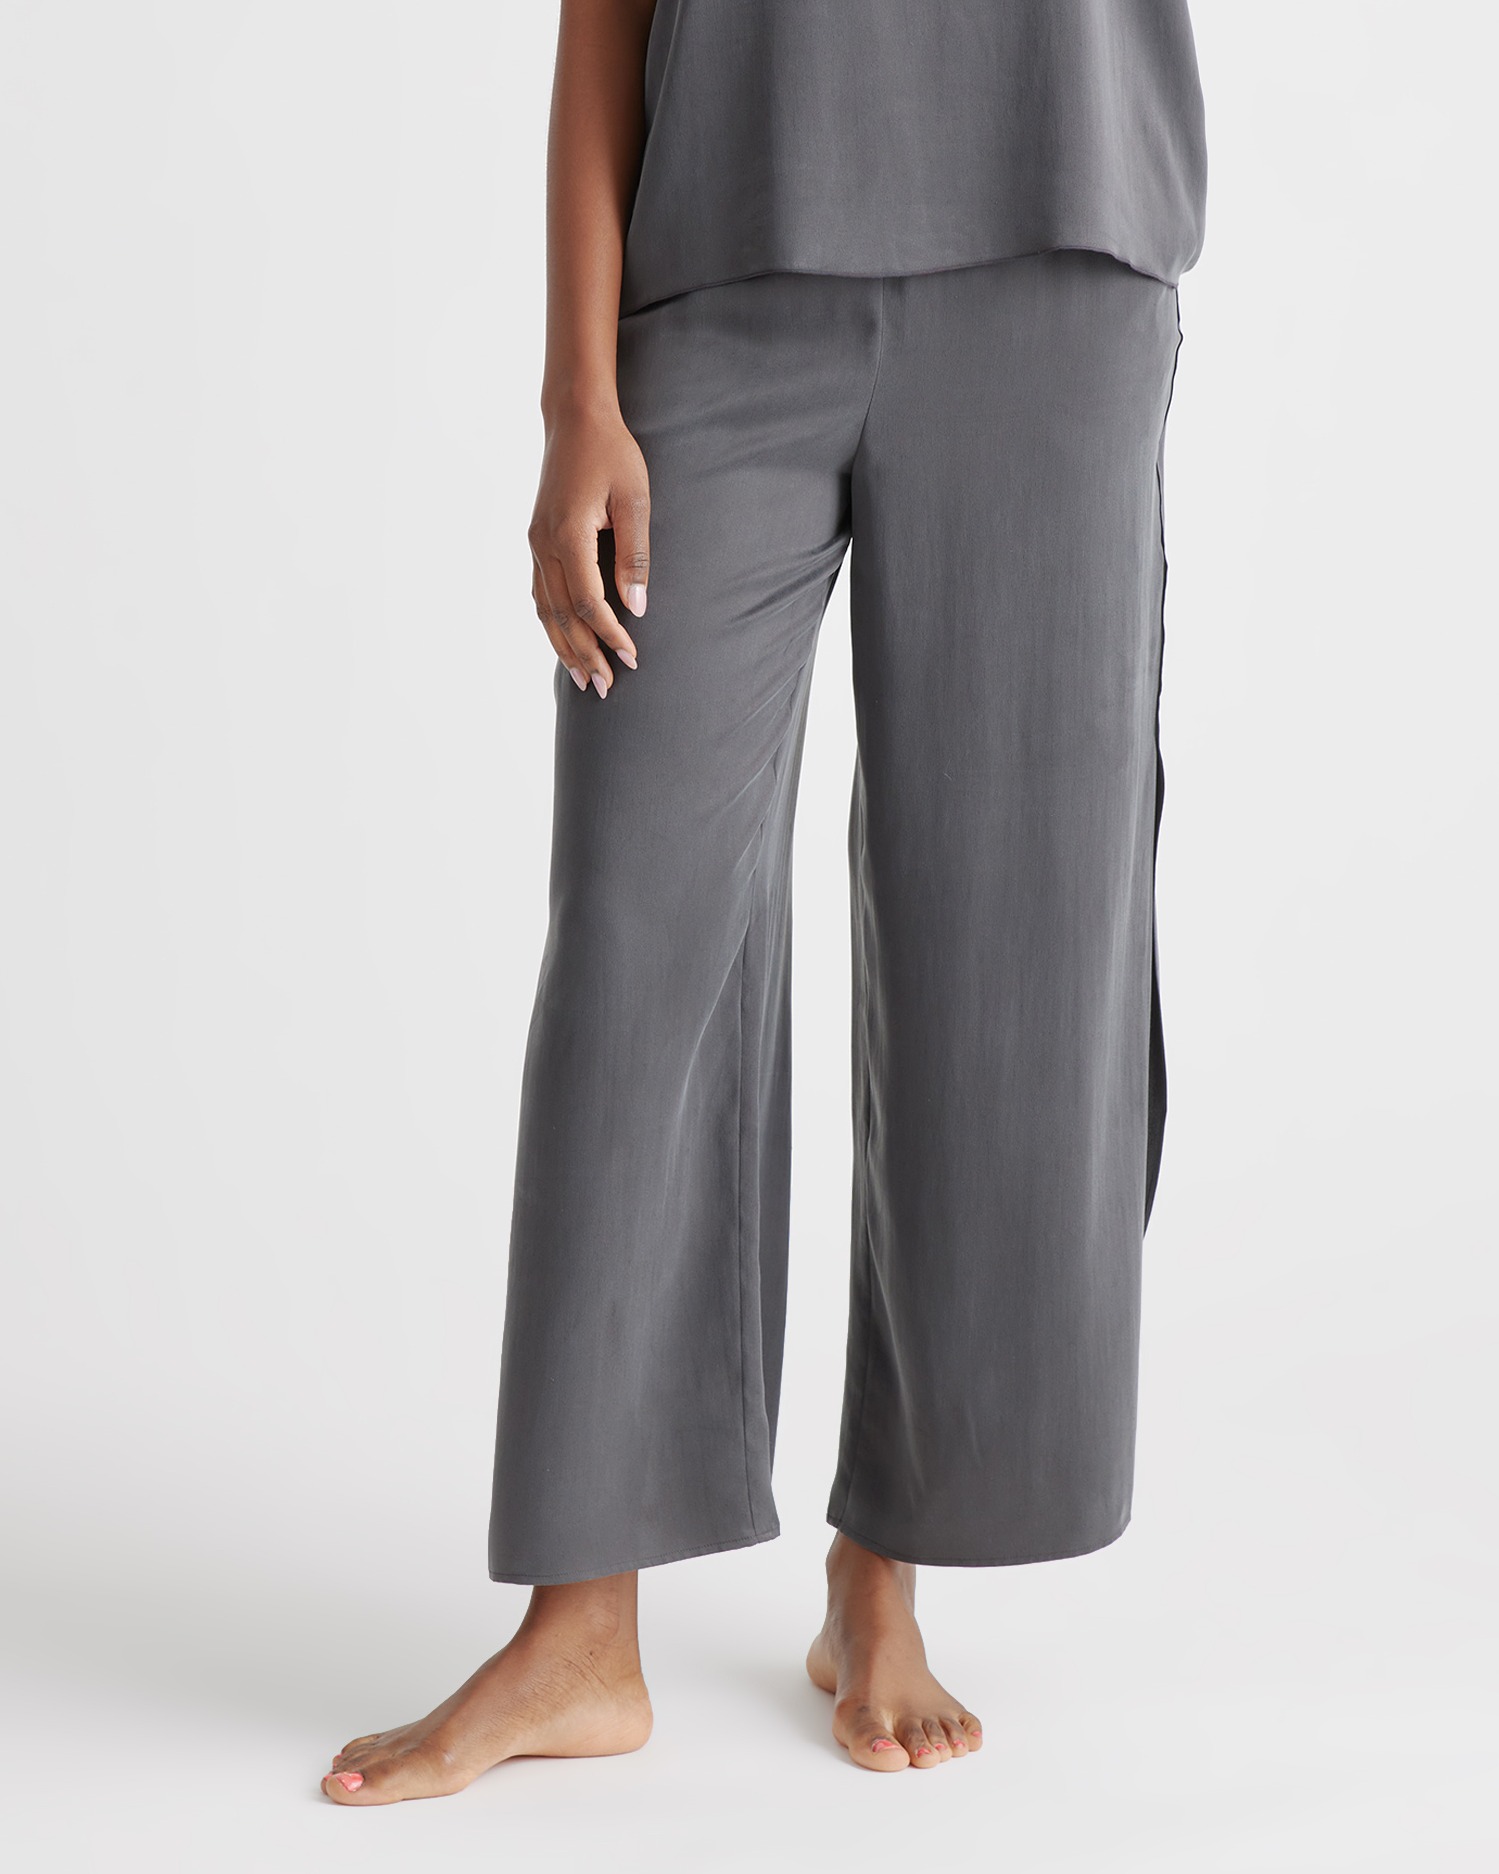 Fashion Ladies Pajama Silk New Long-sleeved Trousers Color Plaid